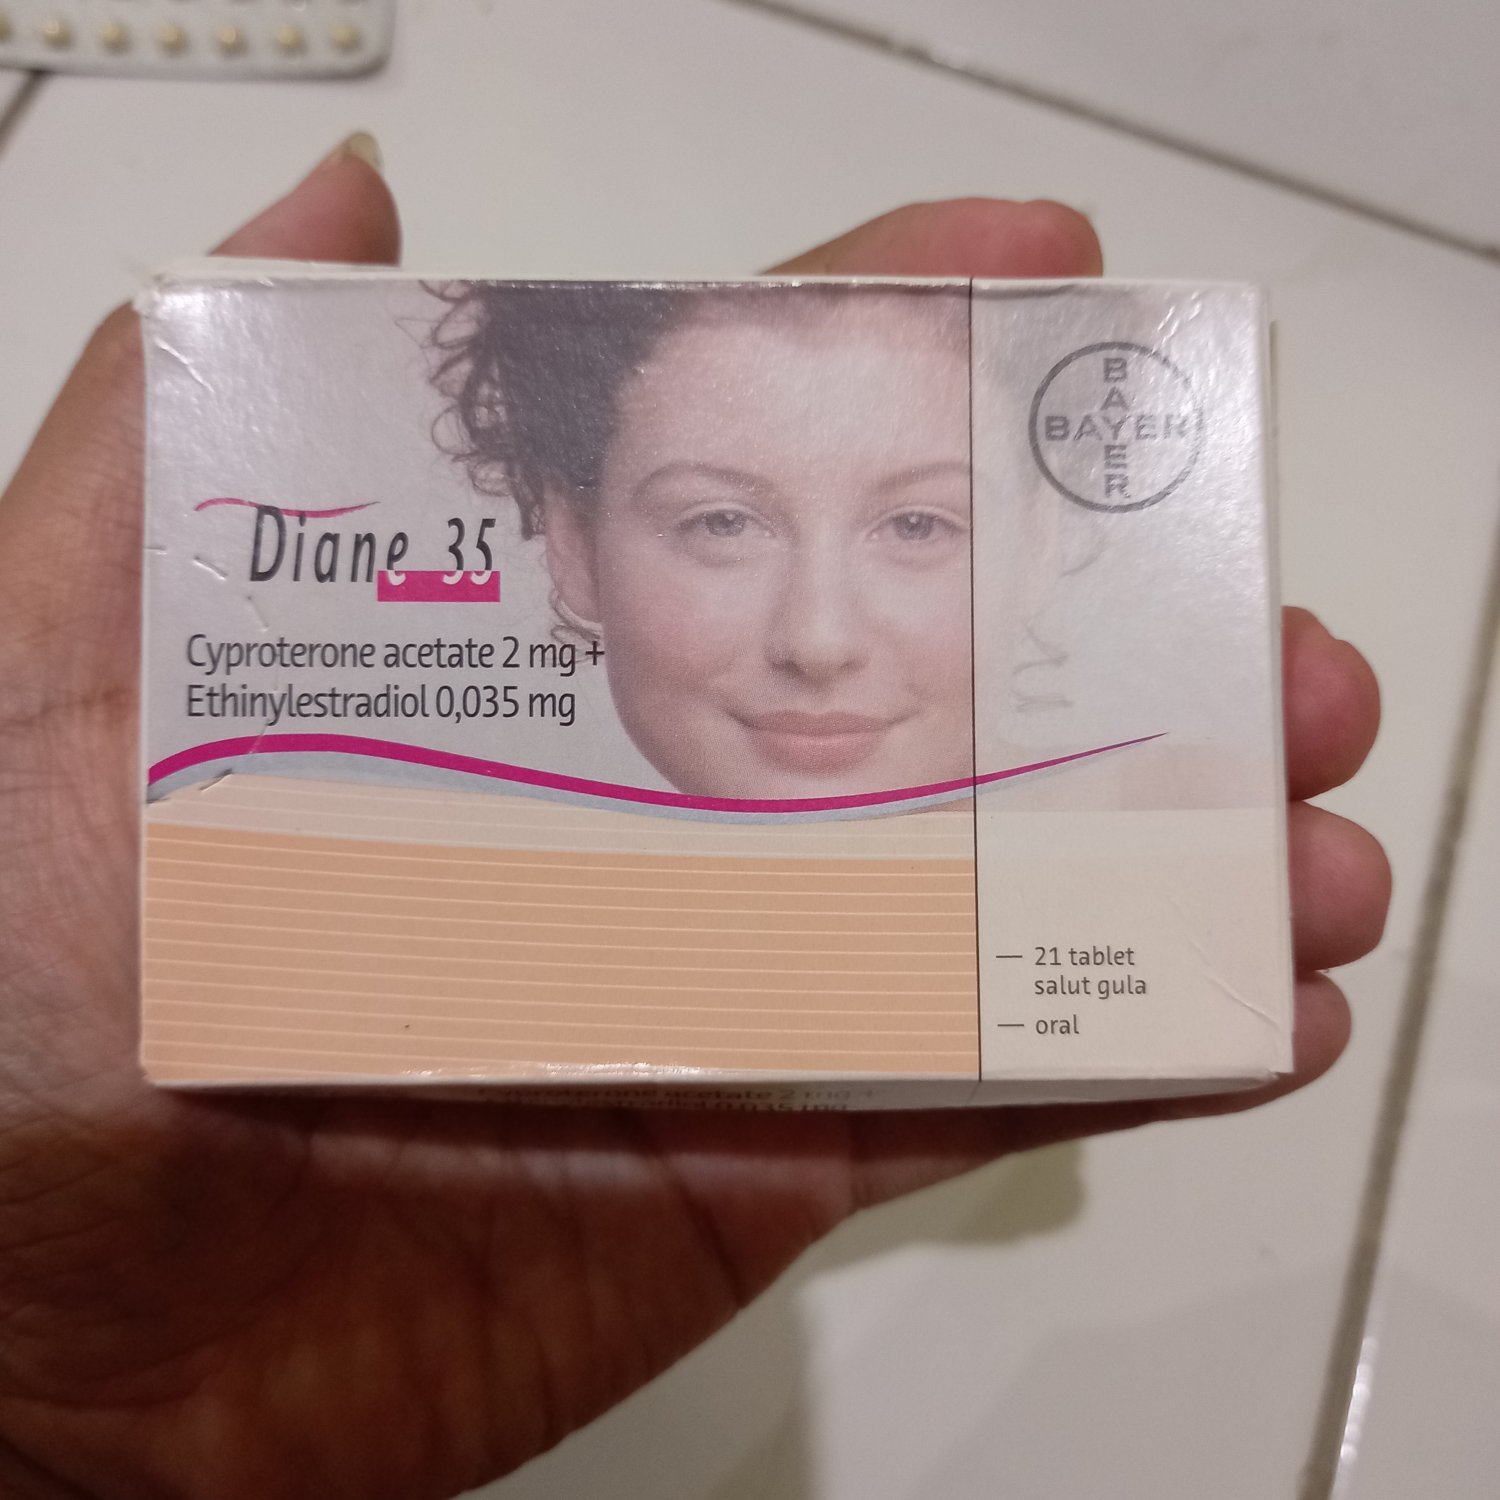 diane 35 birth control for acne